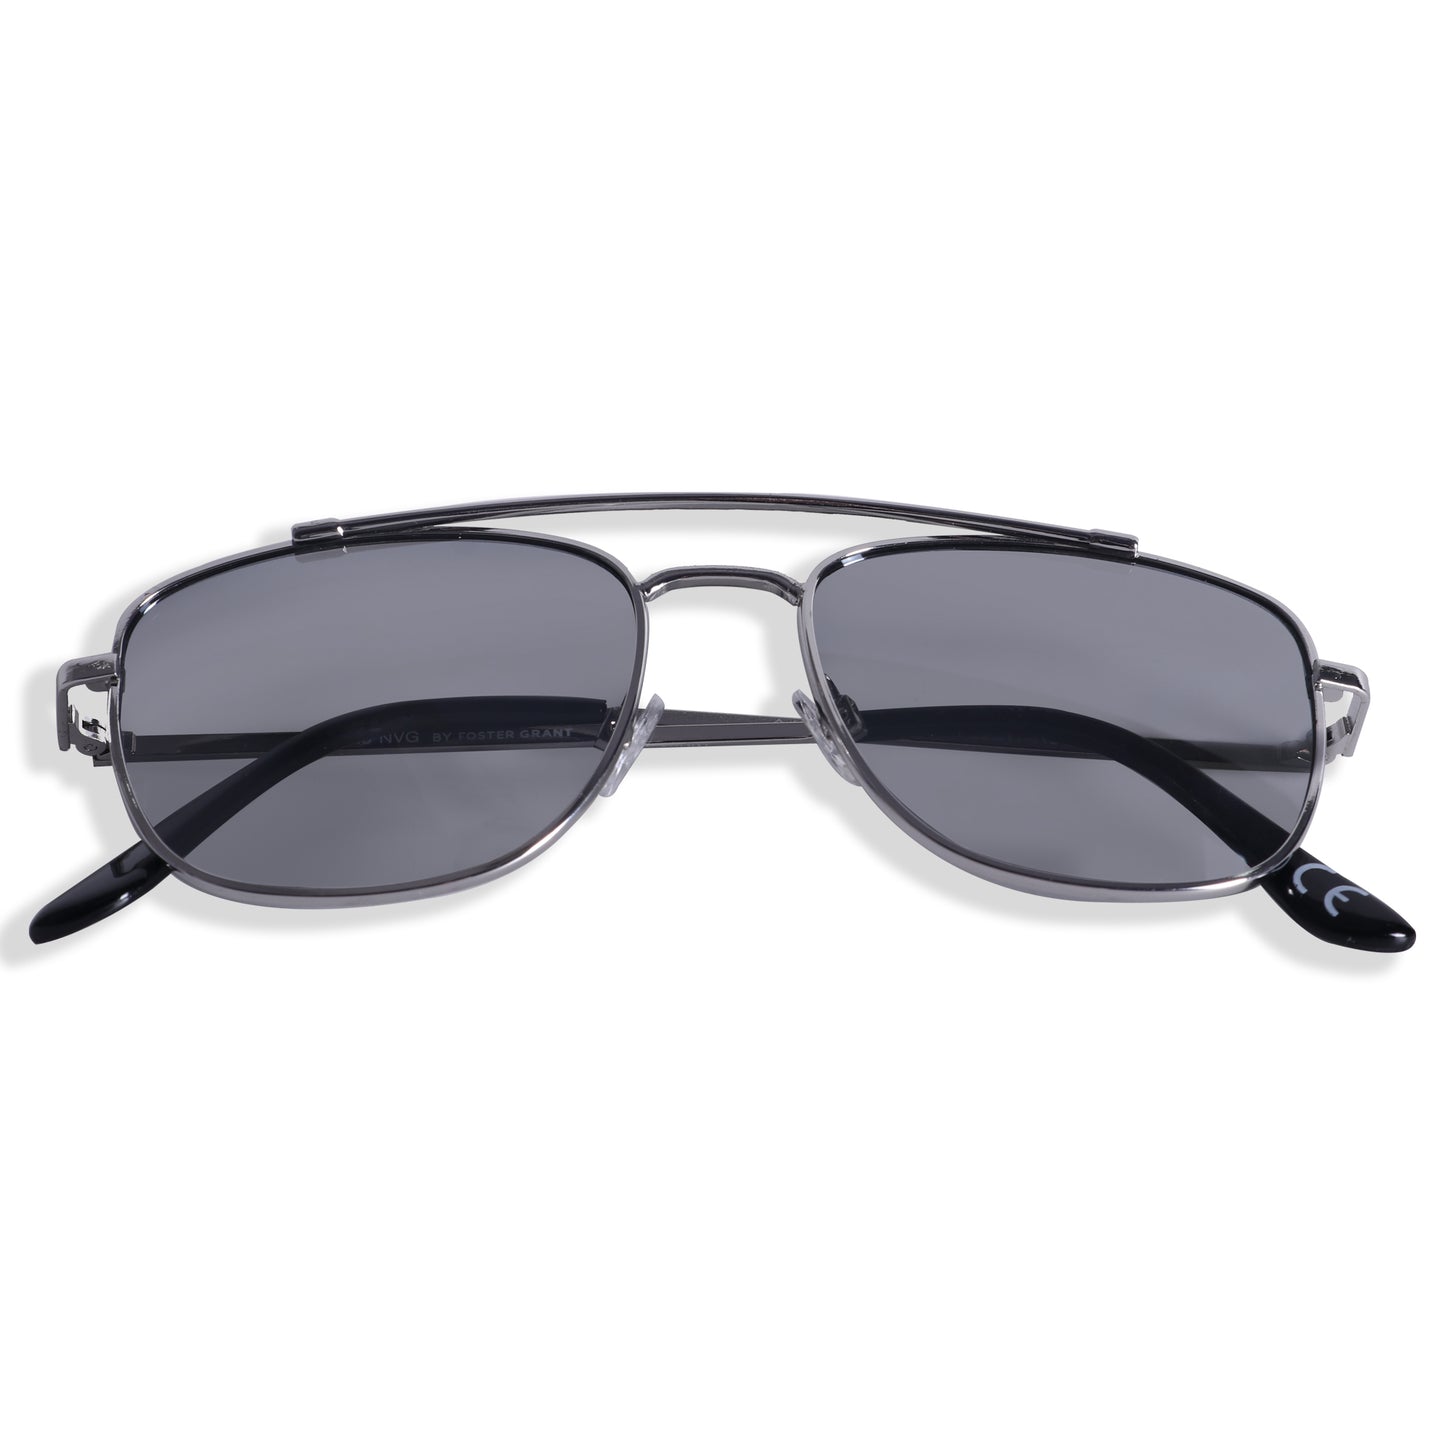 2.5 NVG UV Protected Black Square Sunglasses